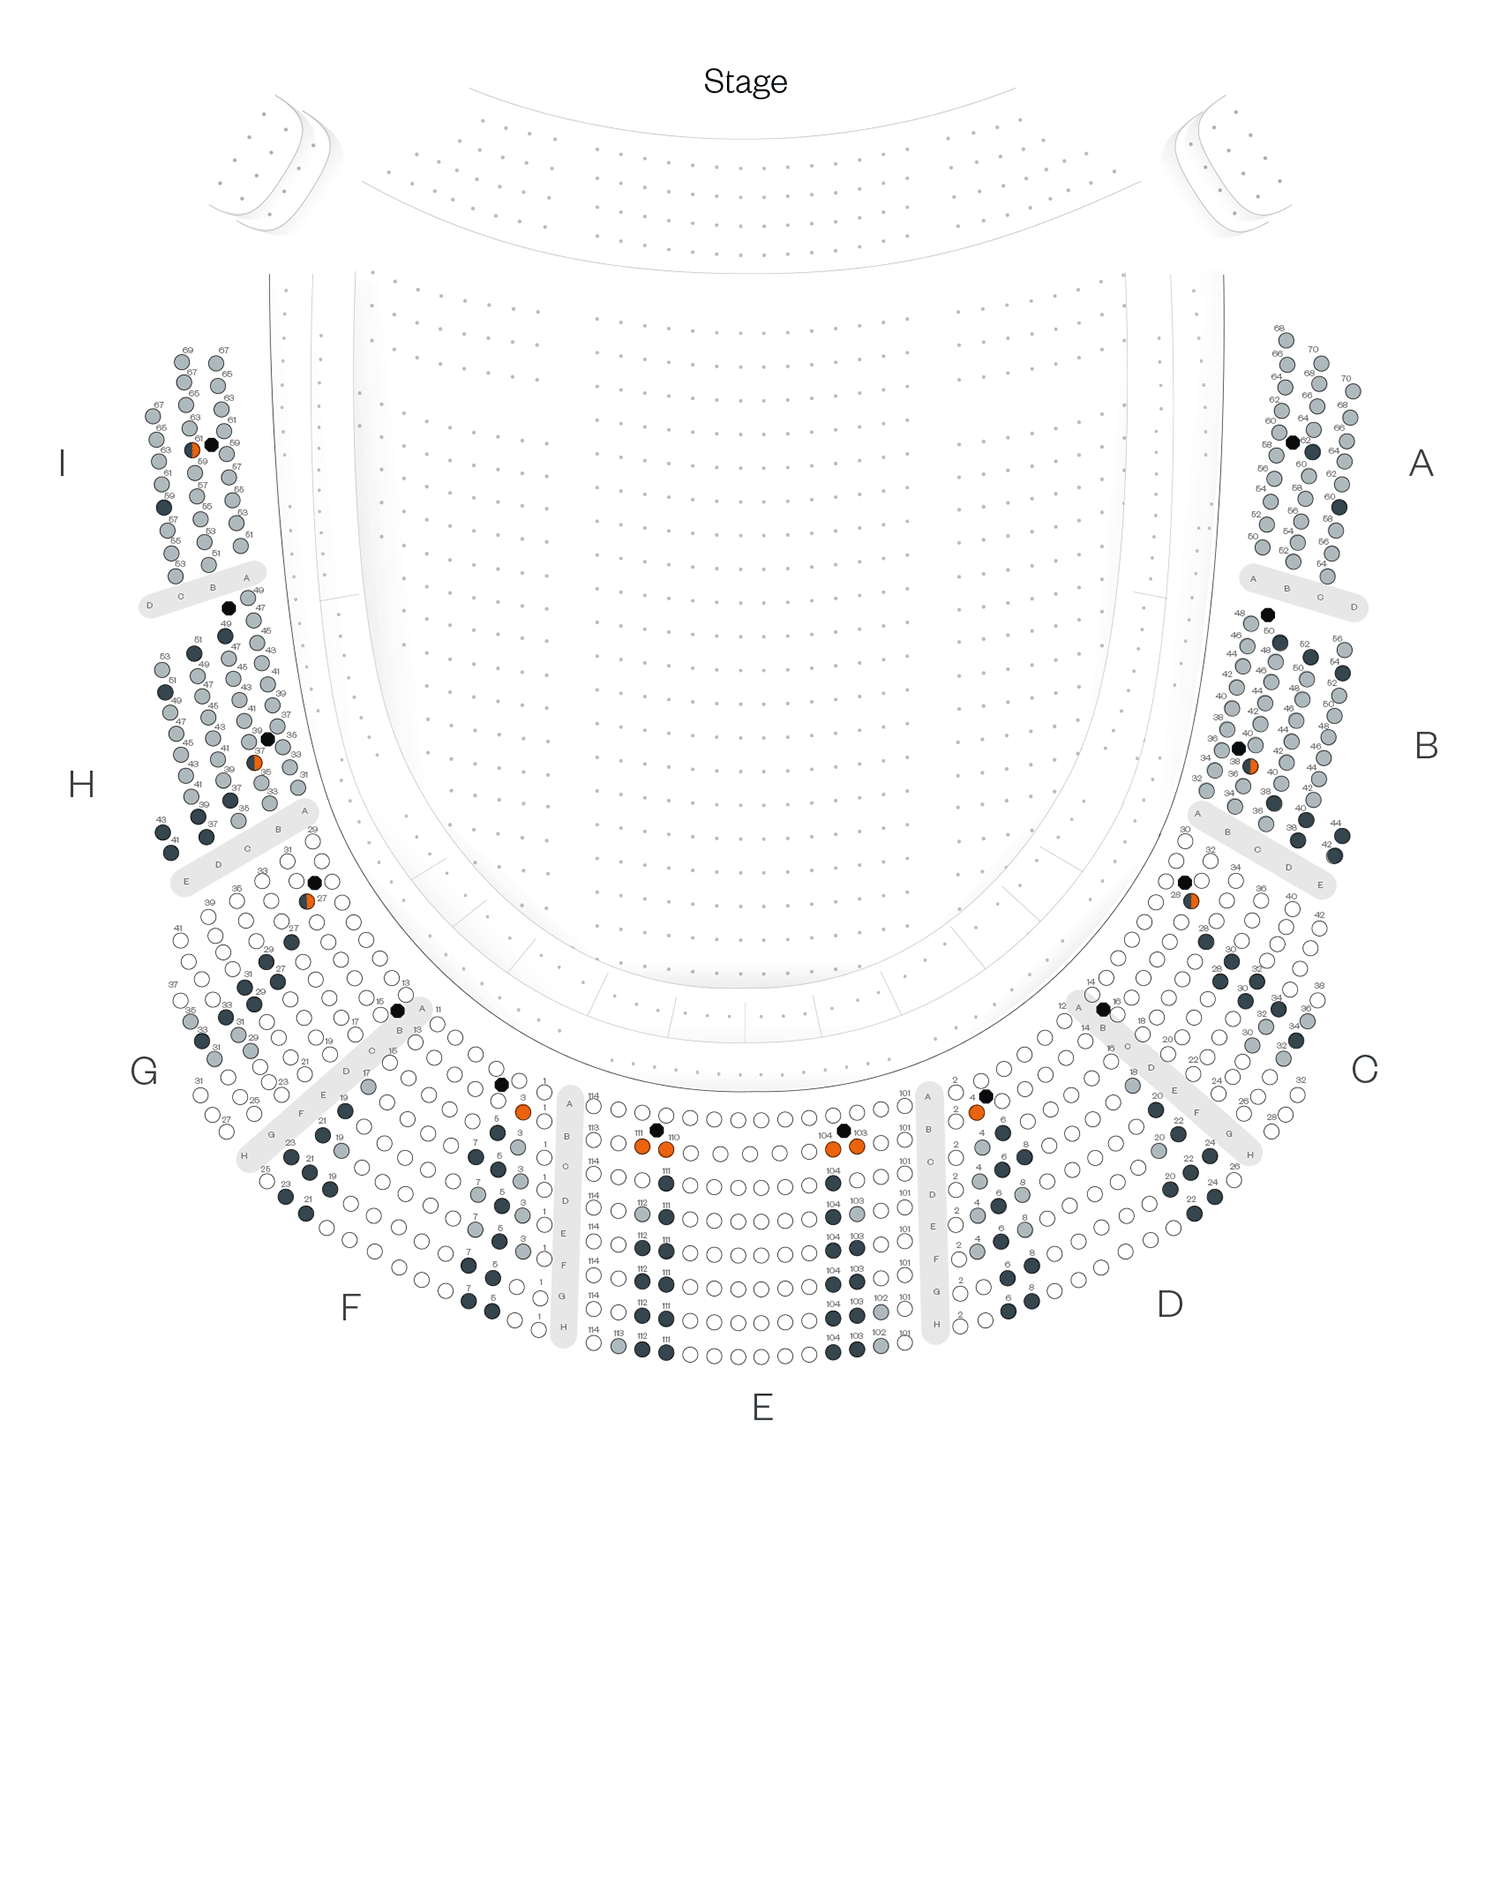 Academy of Music Broadway Amphitheater Seating Chart